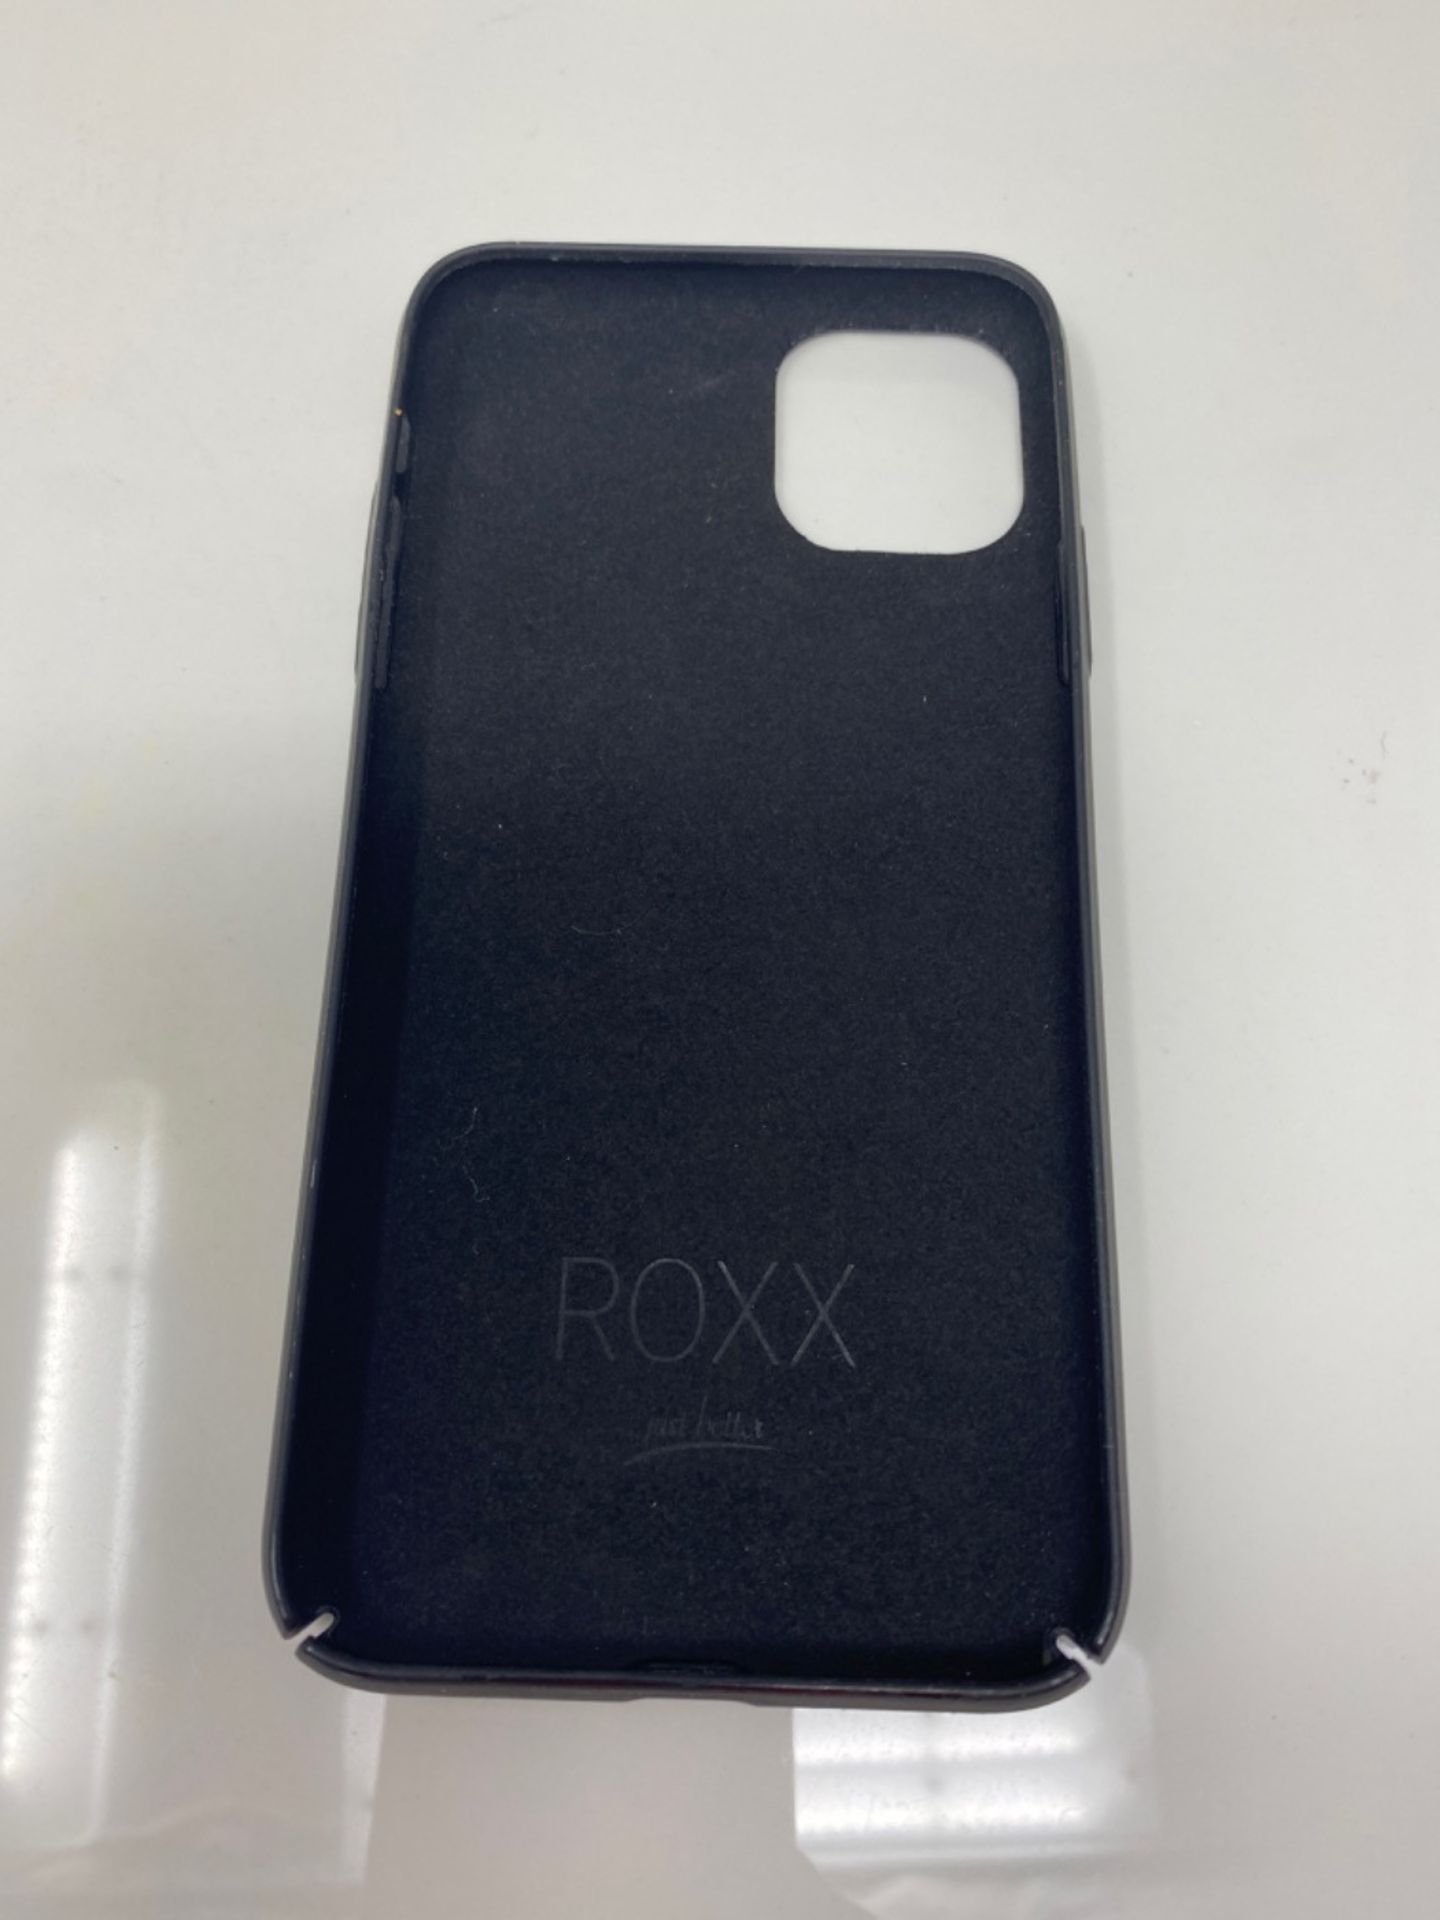 Roxx Apple iPhone 11 Pro Max Case - Image 2 of 2